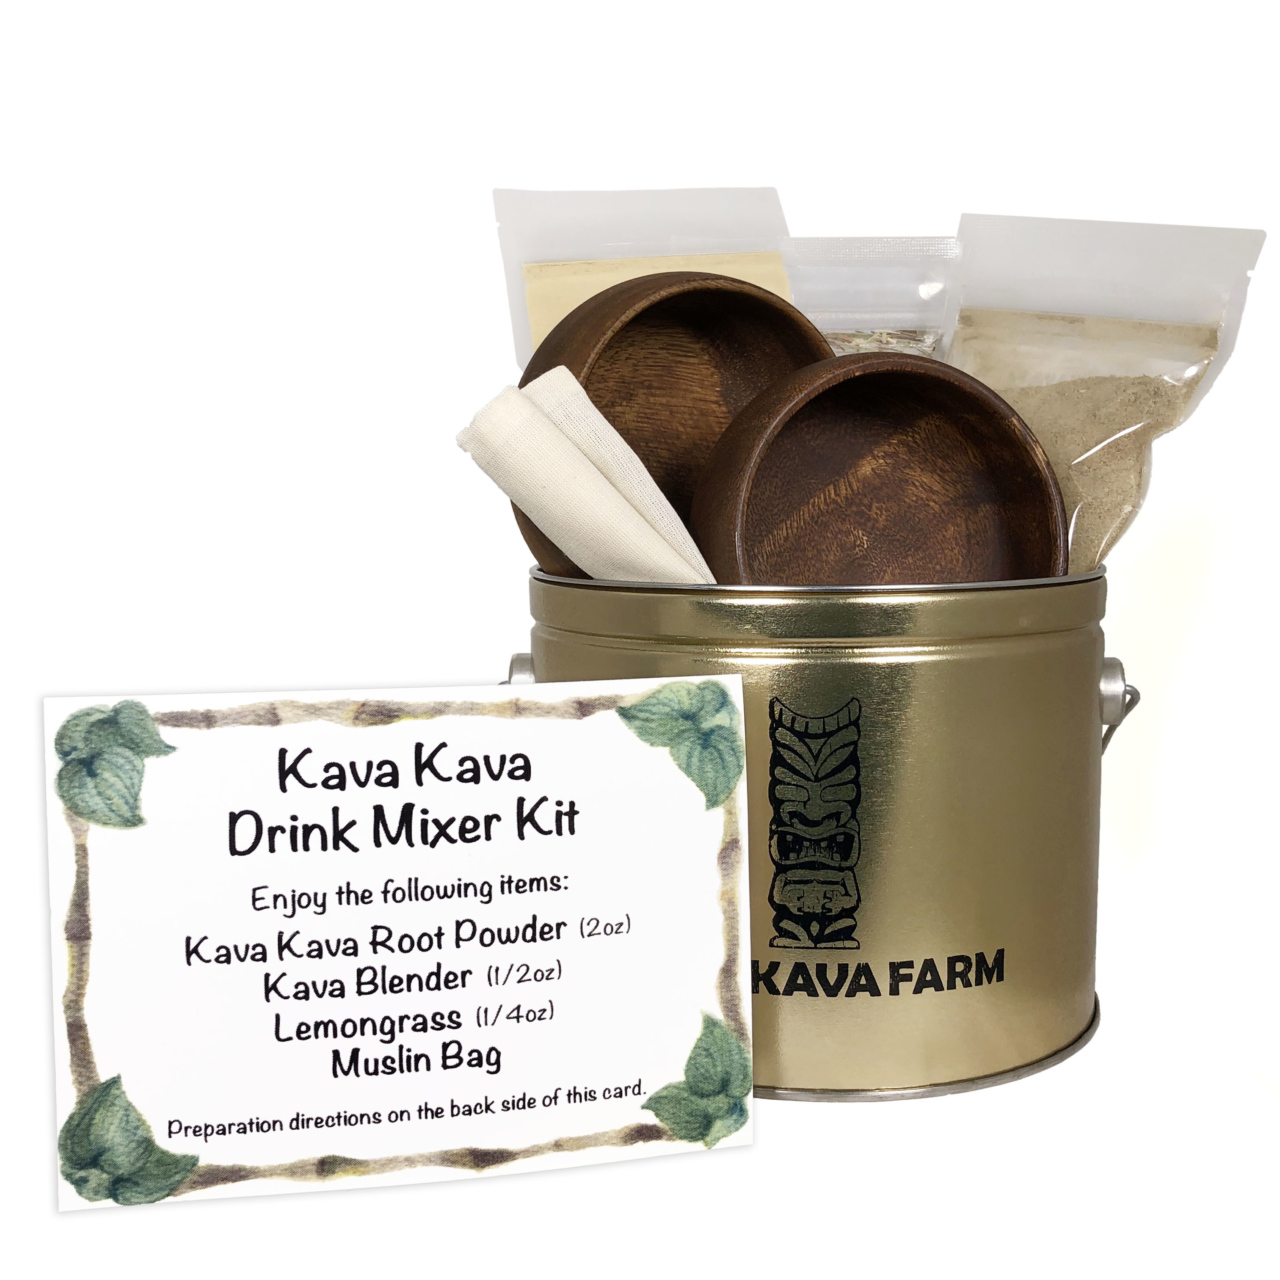 Kava Star Kit For 2 from Kona Kava Farm